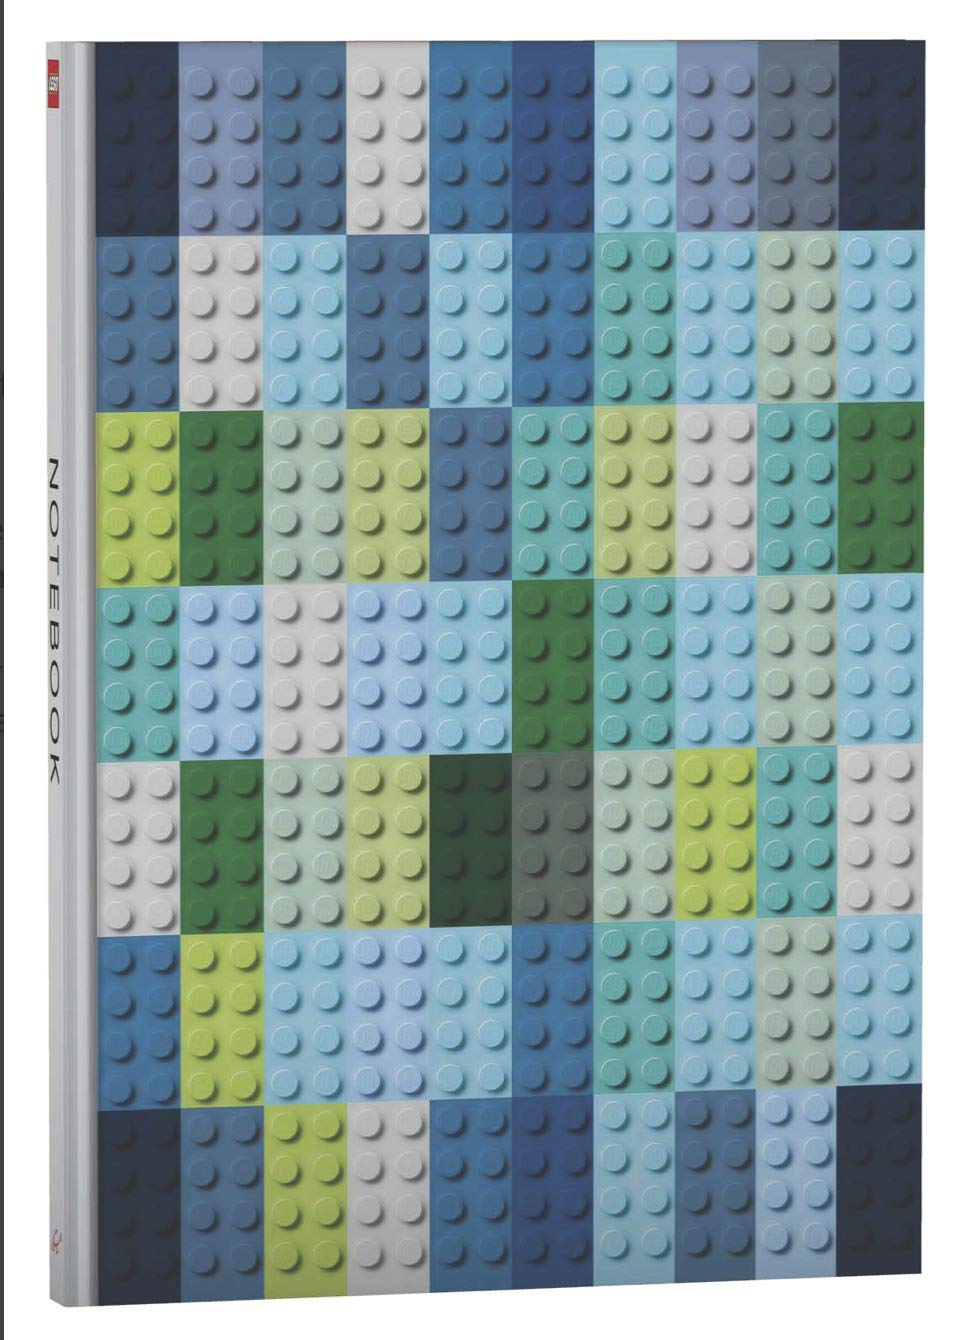 lego notebook.jpg